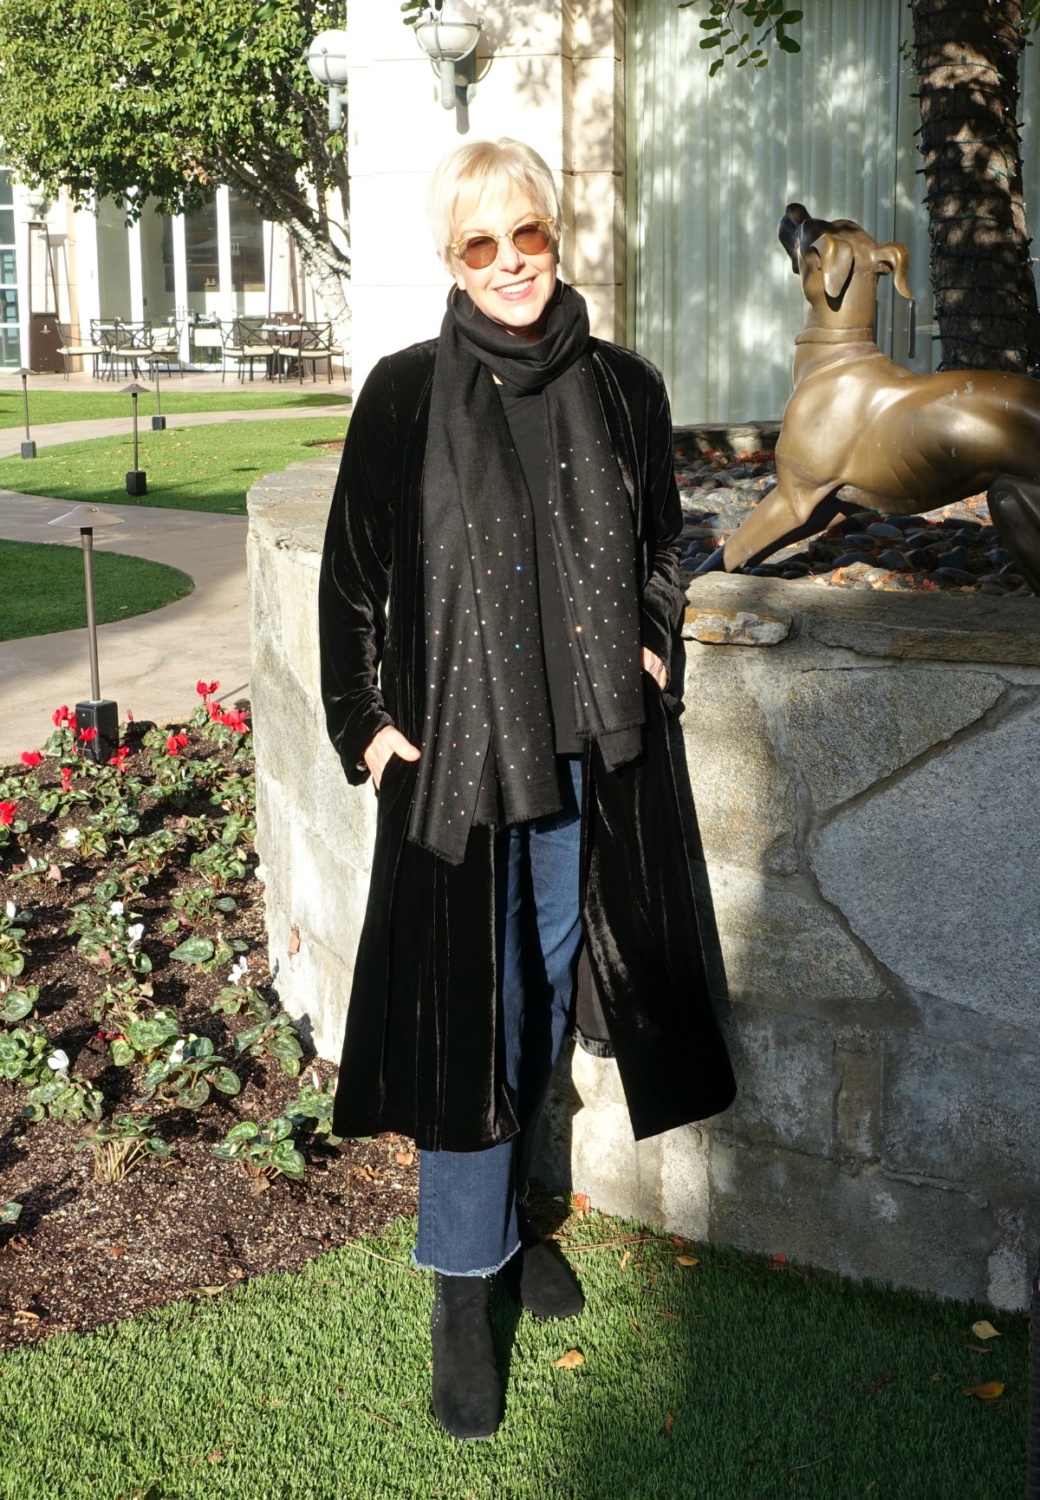 Susan B. wears a black velvet duster, black scarf with Swarovski crystals, jeans, and black suede boots. Details at une femme d'un certain age.